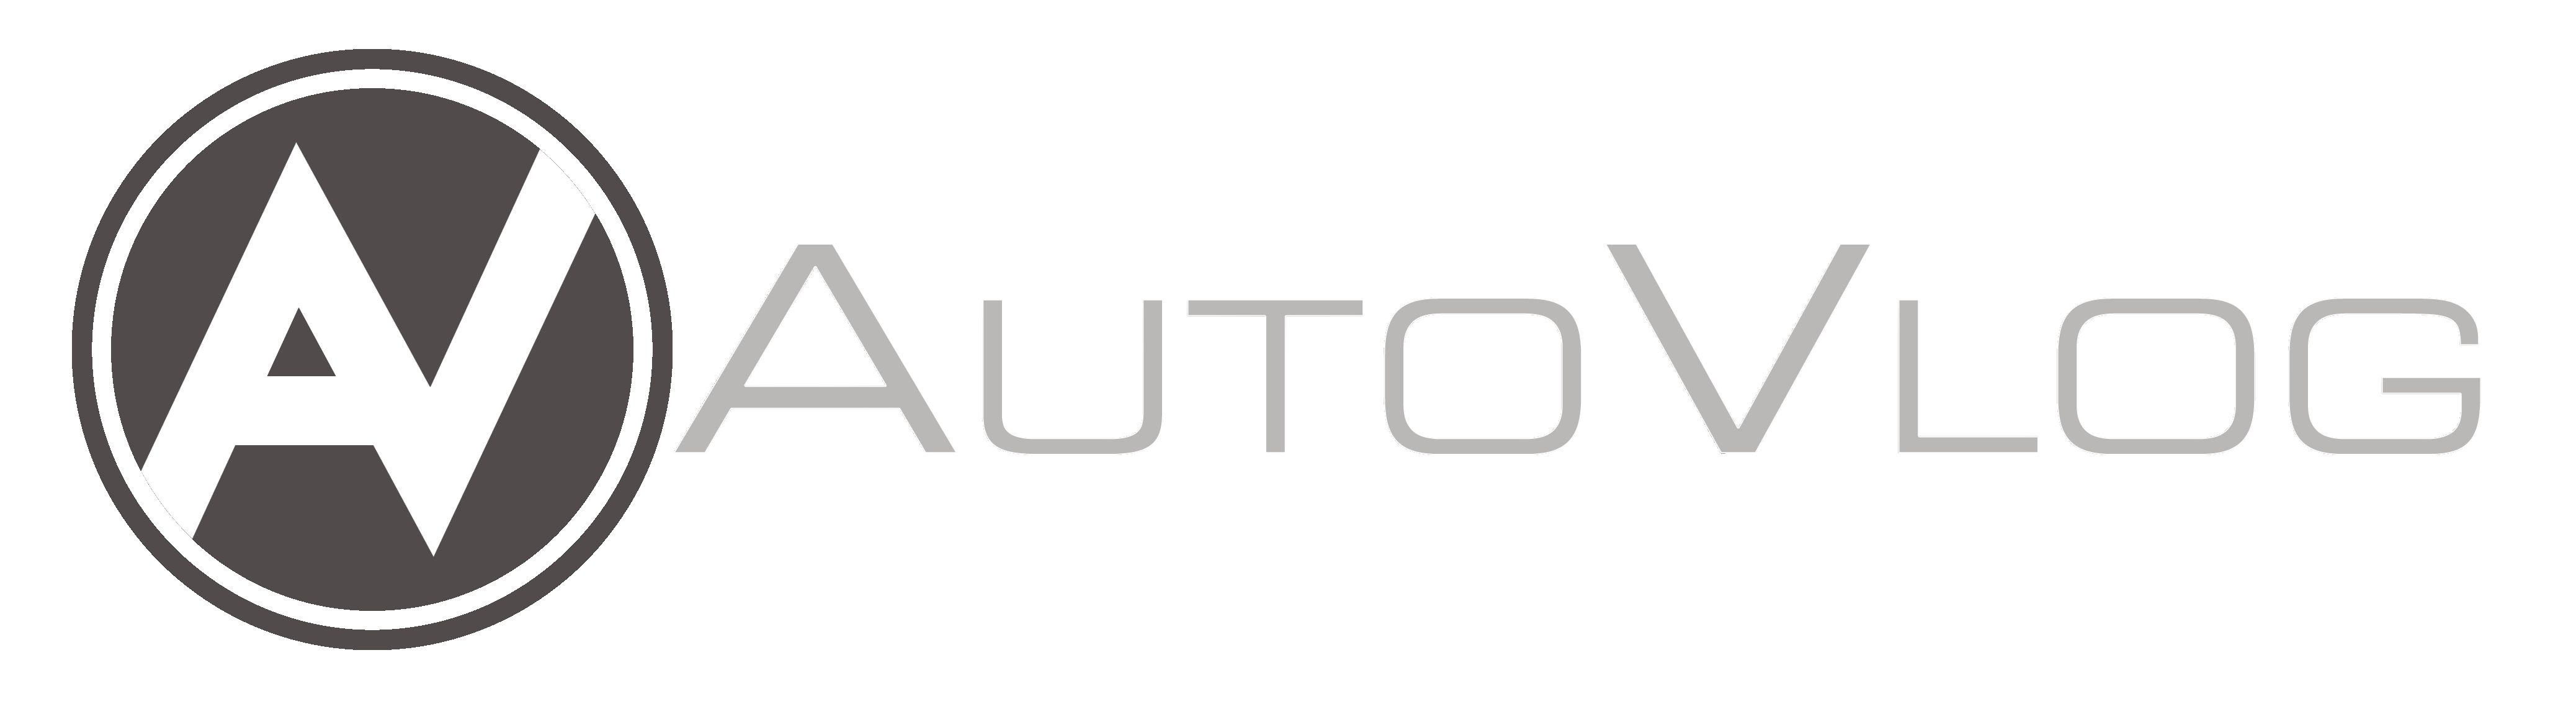 AutoVlog1